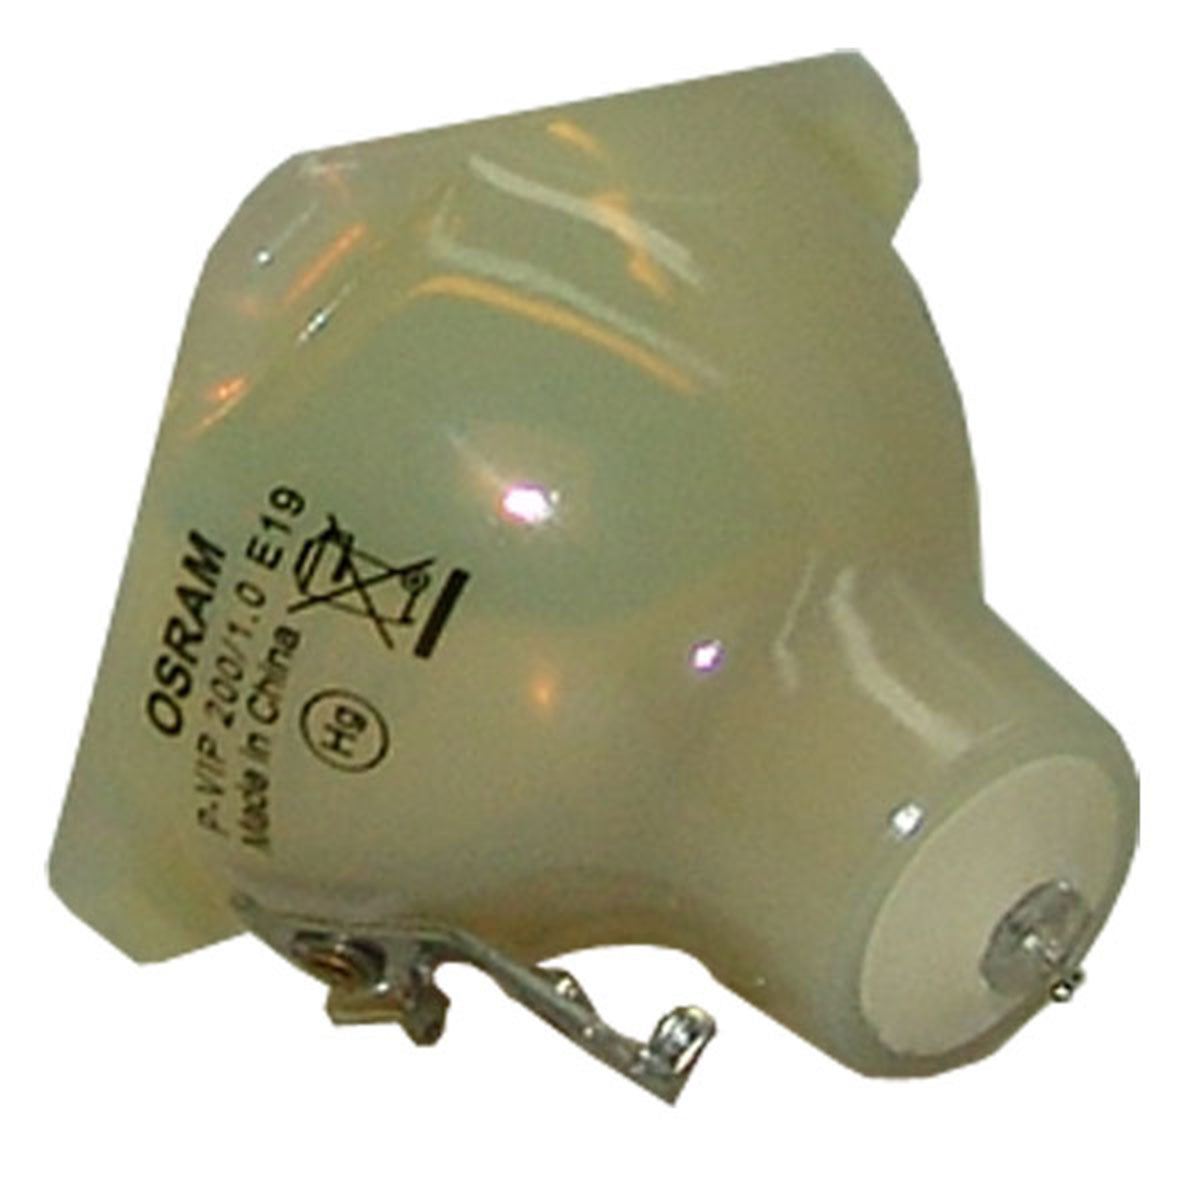 Kindermann 8813 Osram Projector Bare Lamp